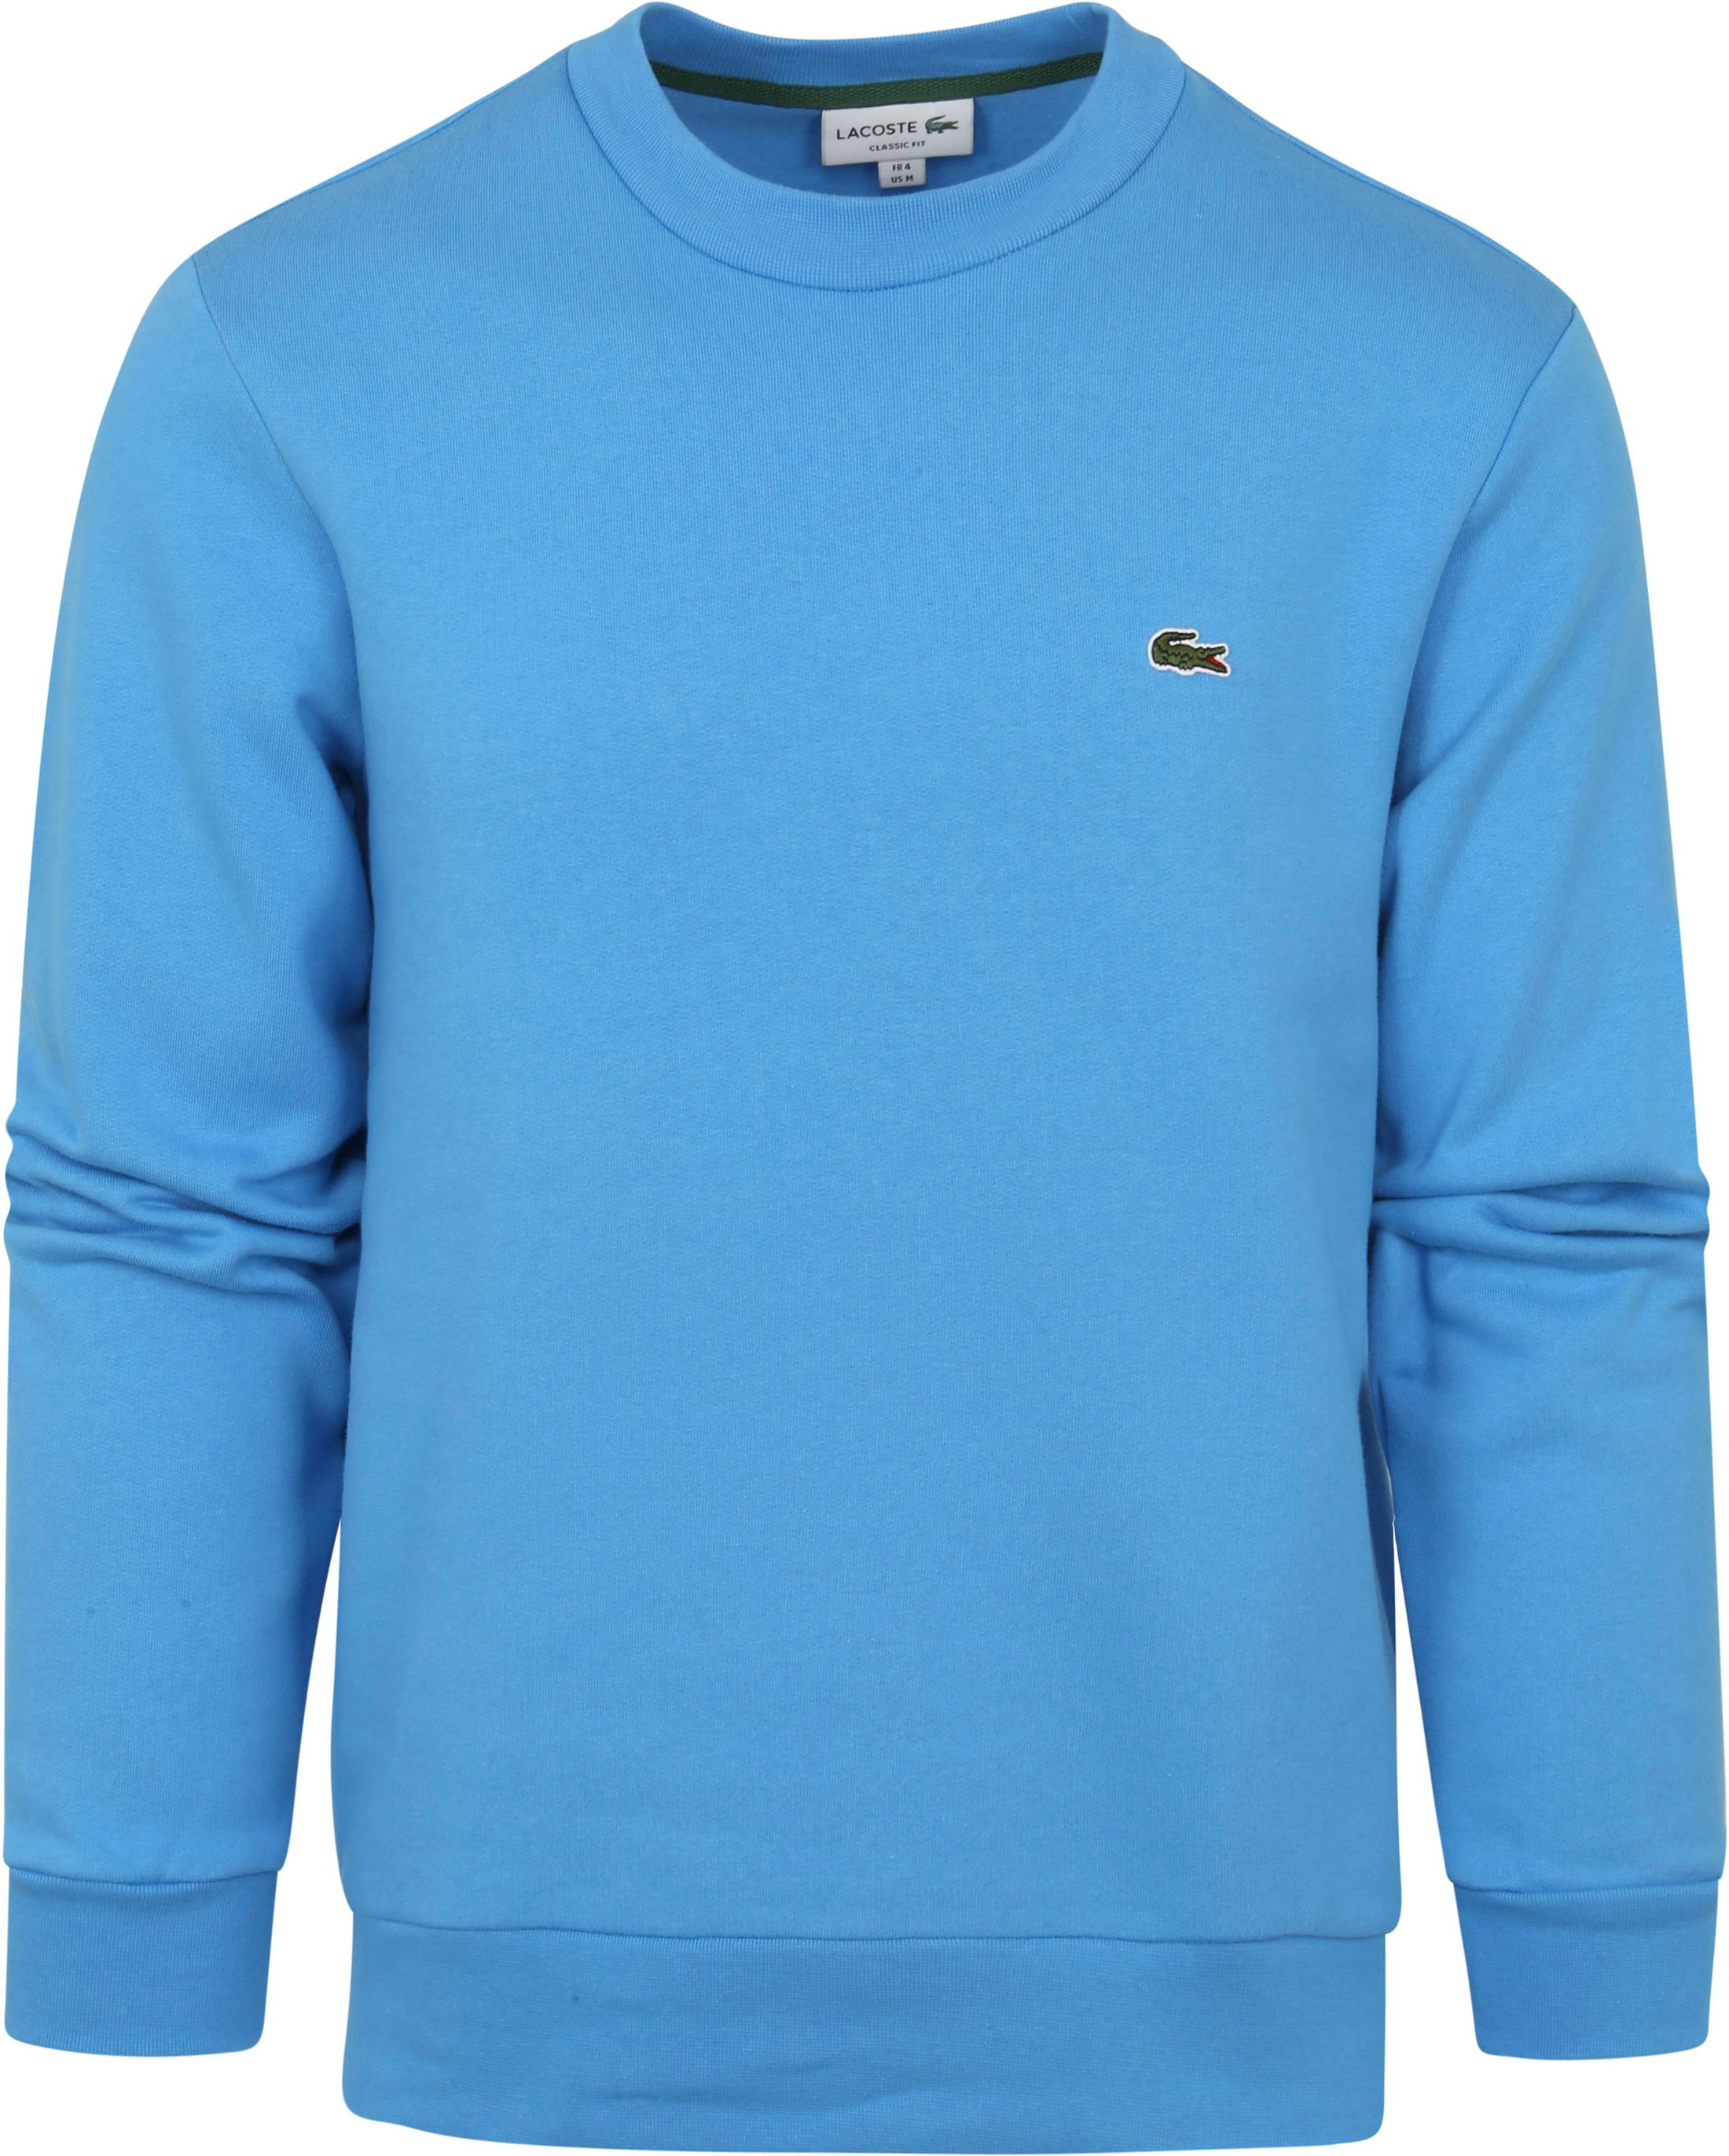 Lacoste Sweater O-neck Blue size L